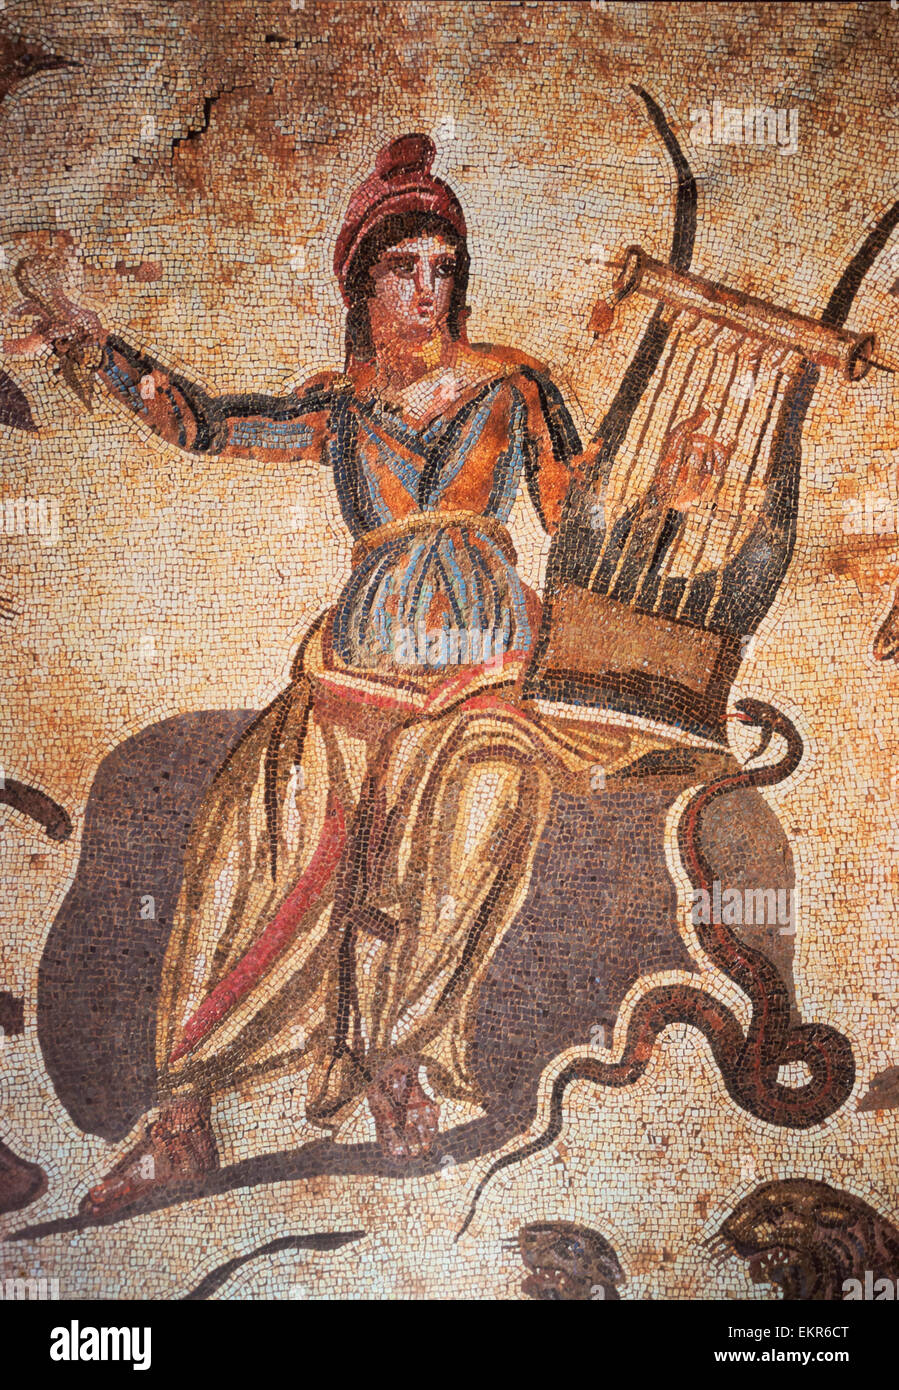 Pittura a mosaico nel parco archeologico, Paphos (Paphos), la Repubblica di Cipro Foto Stock